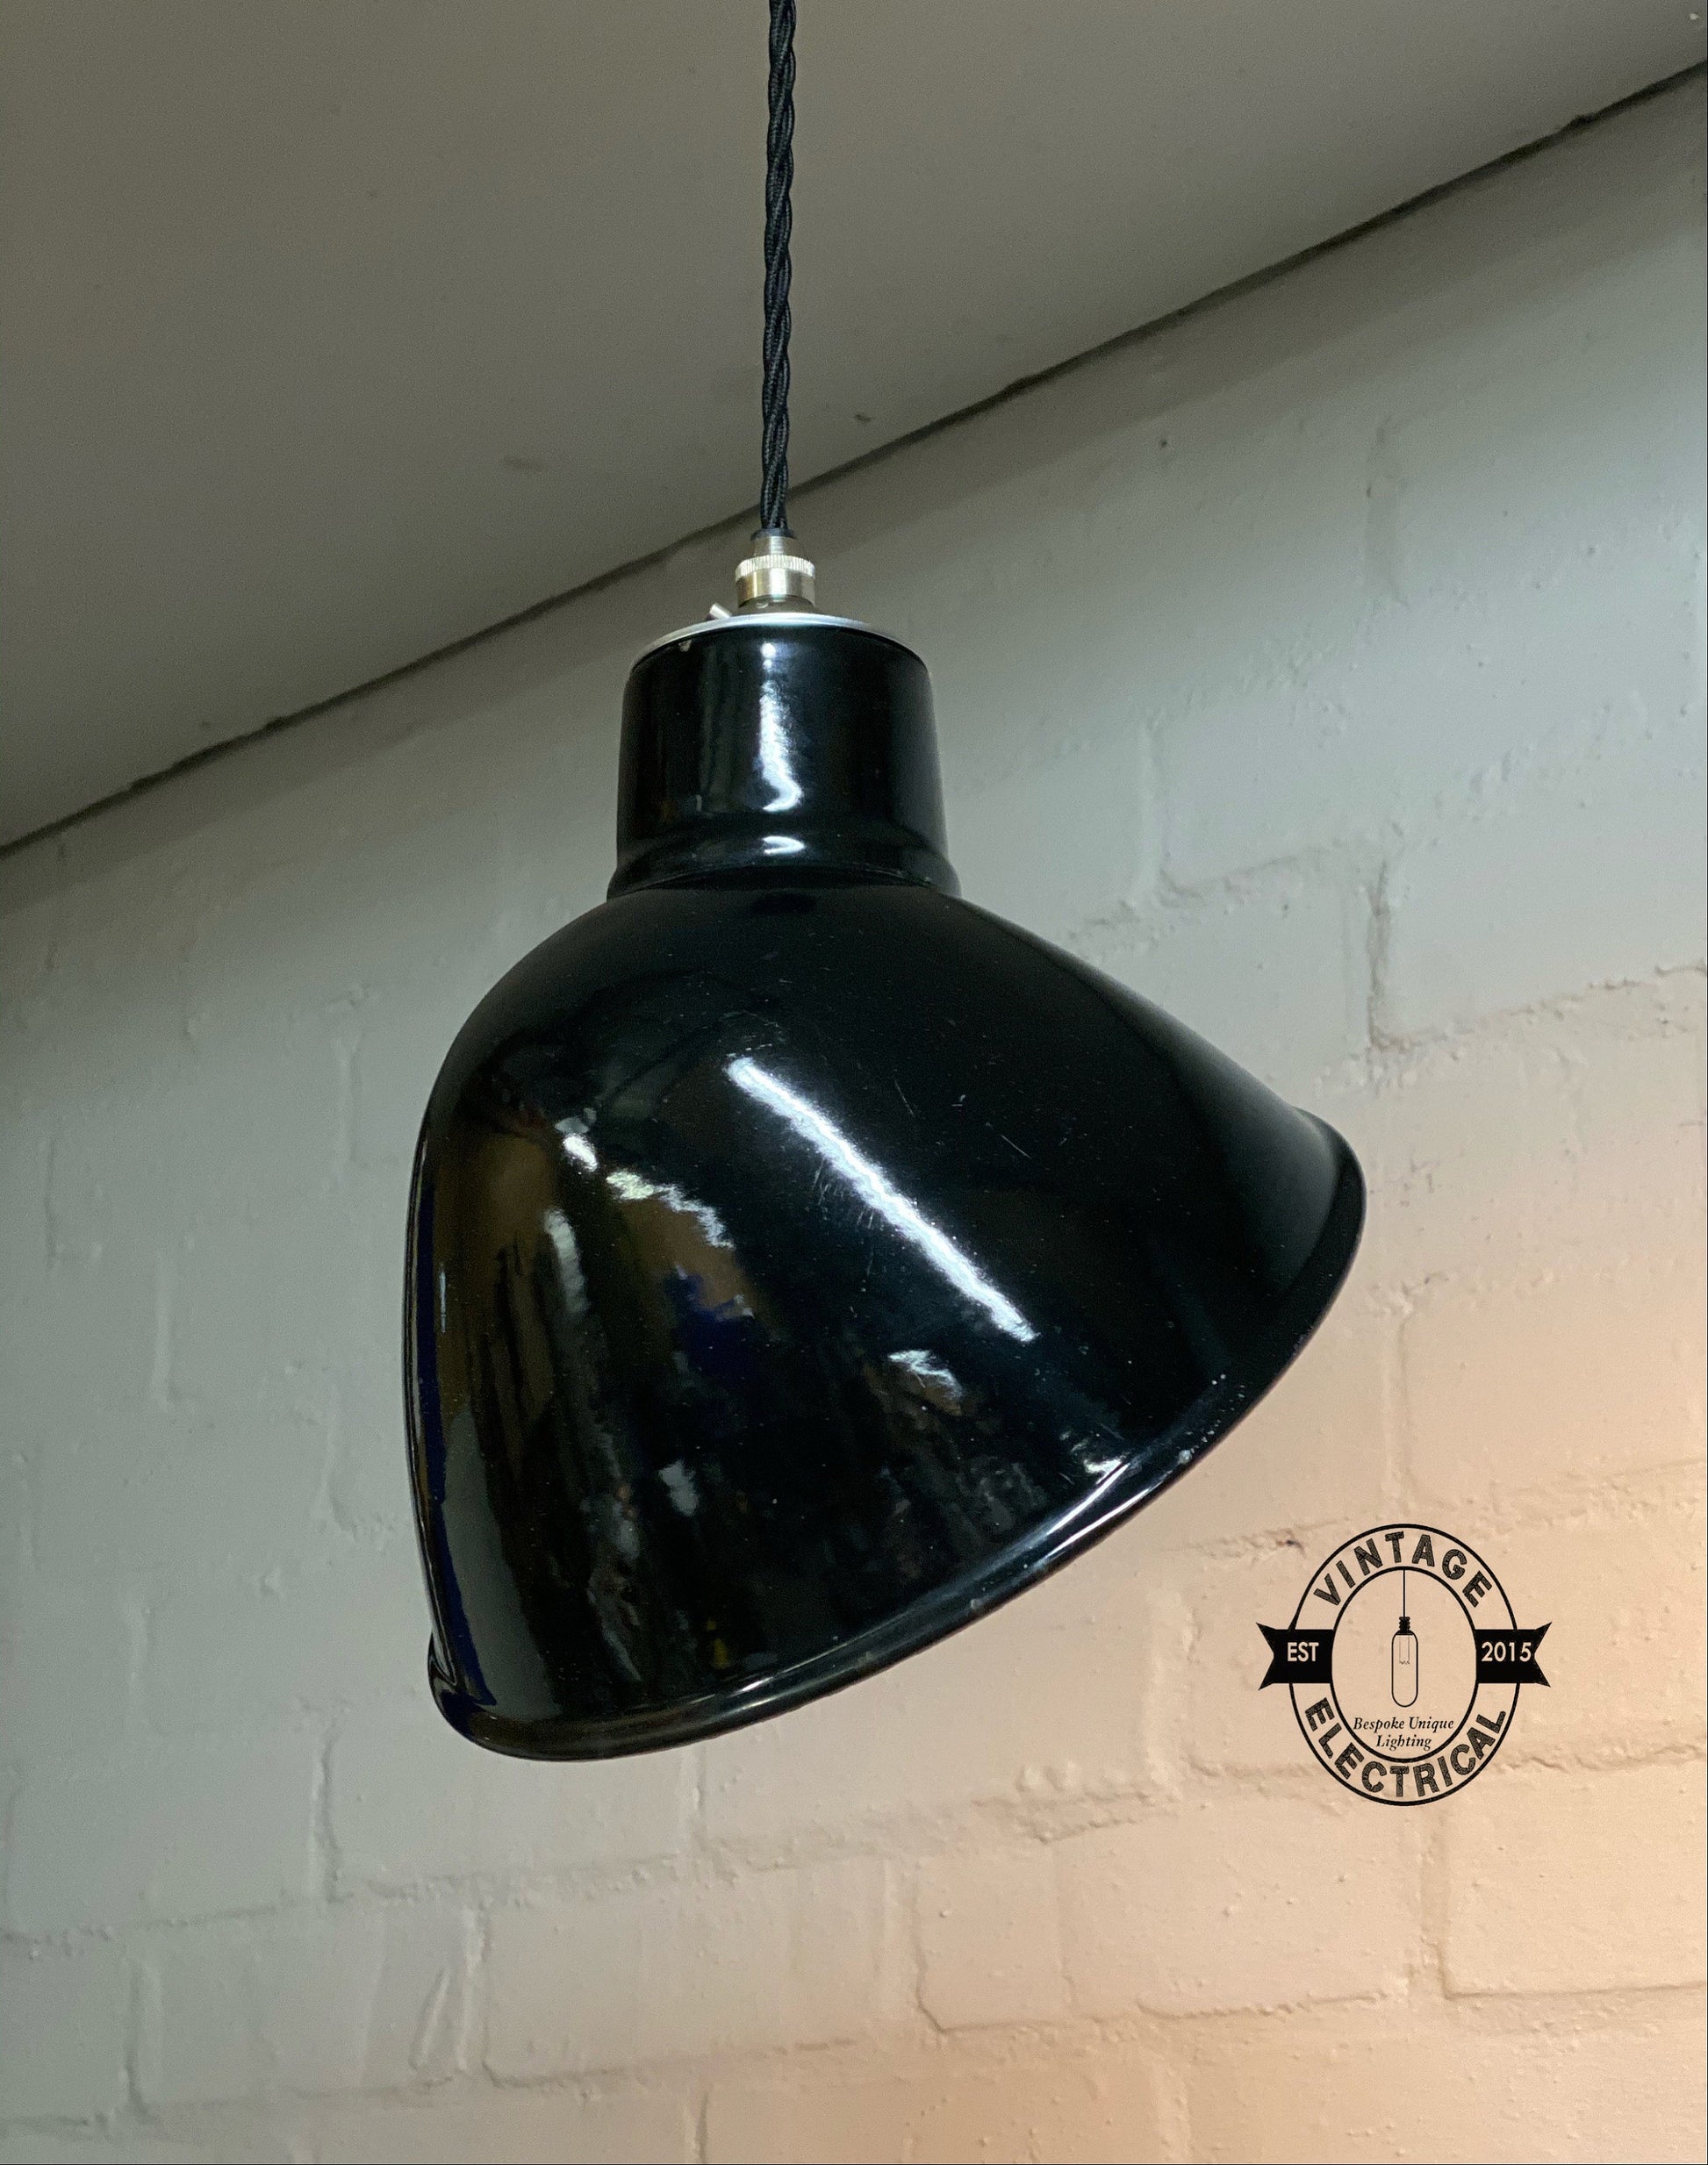 Stratton ~ Midnight Black Parabolic Angled Shade Pendant Set Light | Ceiling Dining Room 1950’s Thorlux Style | Vintage Edison Bulb Lamp